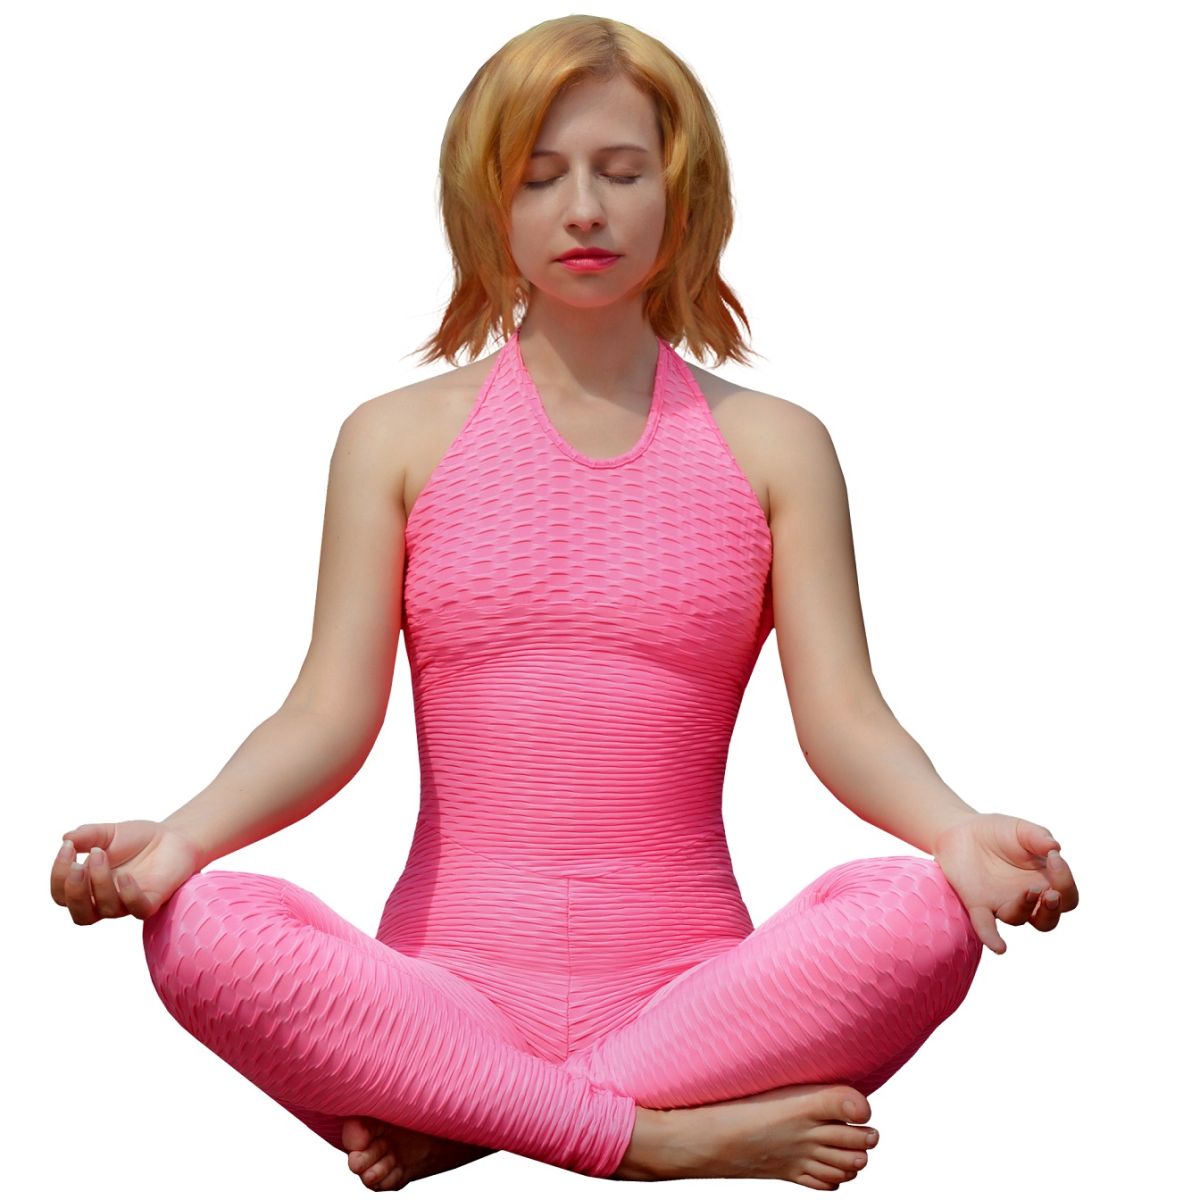 New Study Explores How Yoga Reduces Stress